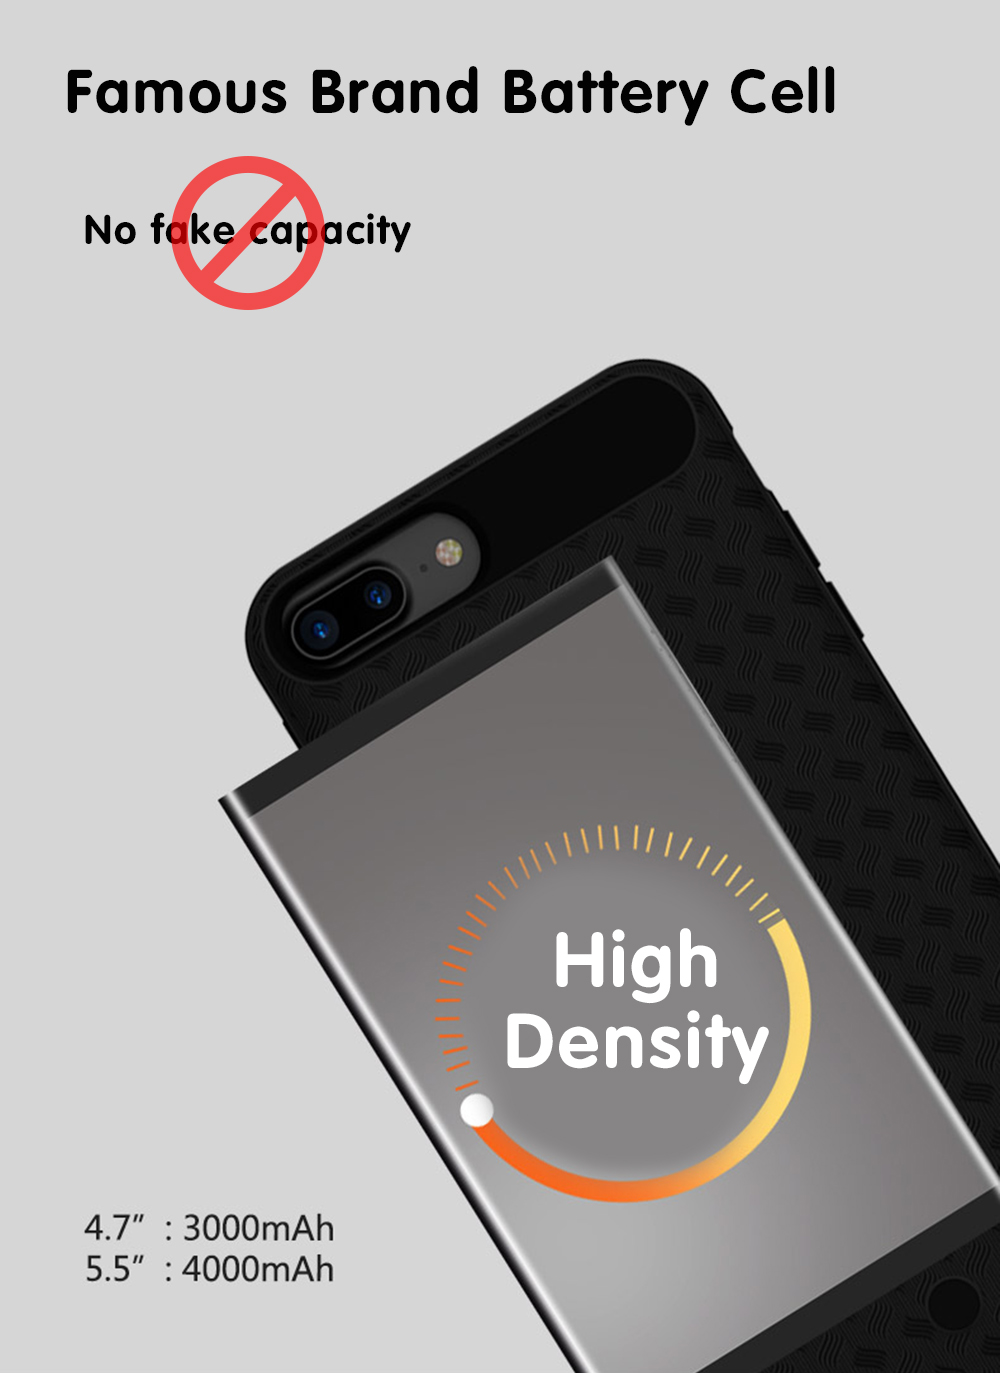 iphone 6 charging case